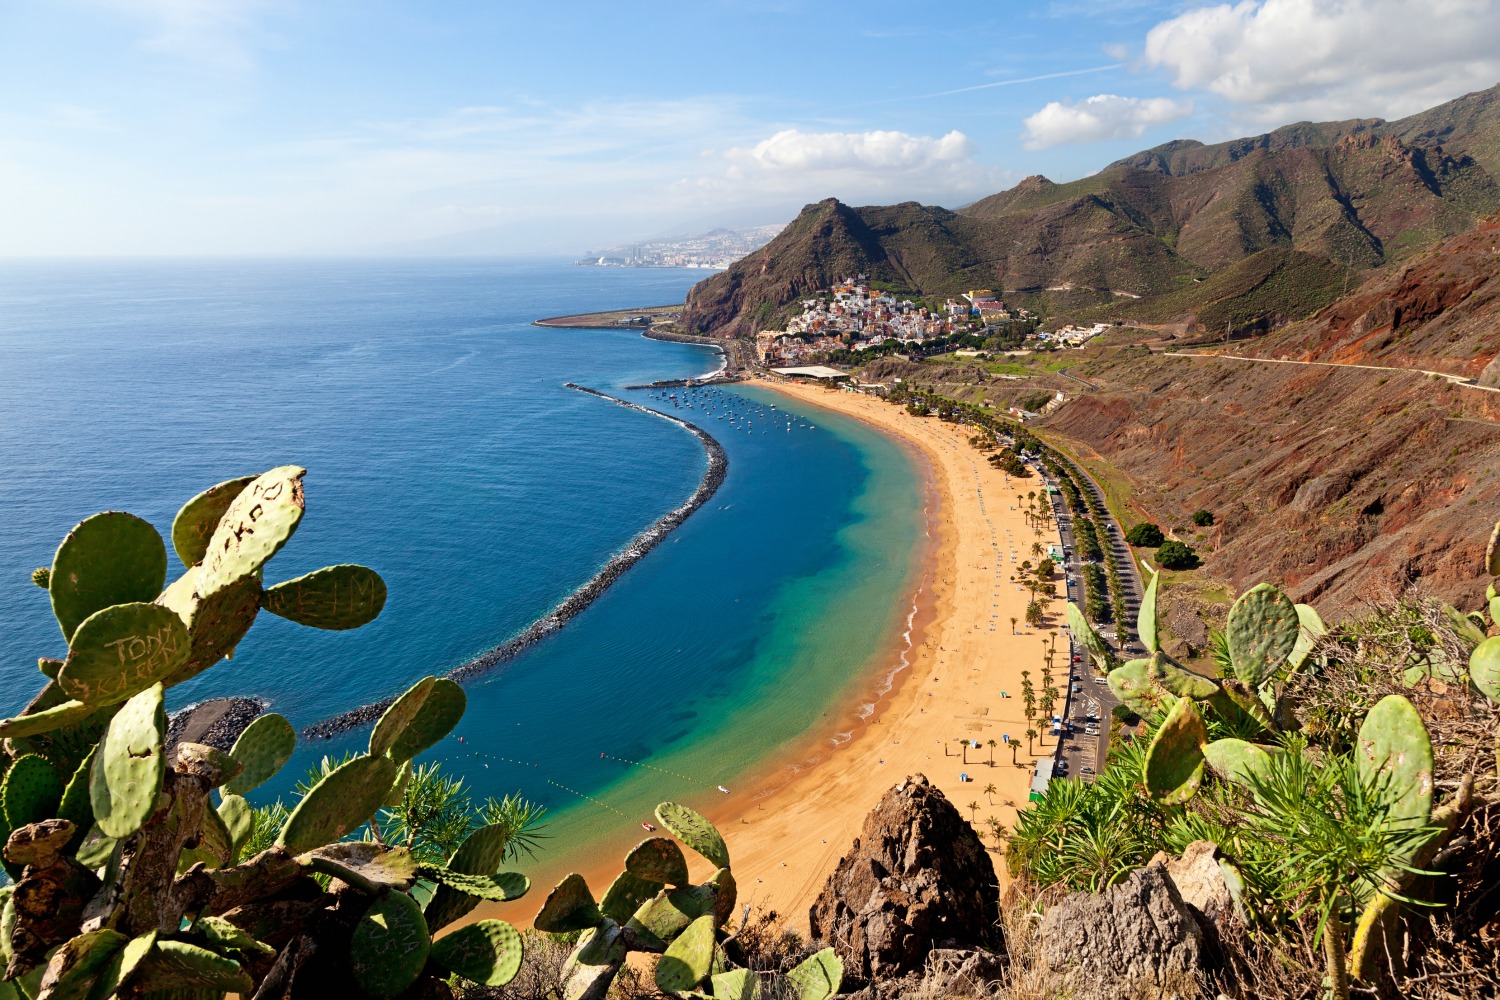 View of Las Teresitas Beach, Tenerife, Spain - one of the best golden sand beaches in Tenerife with kids